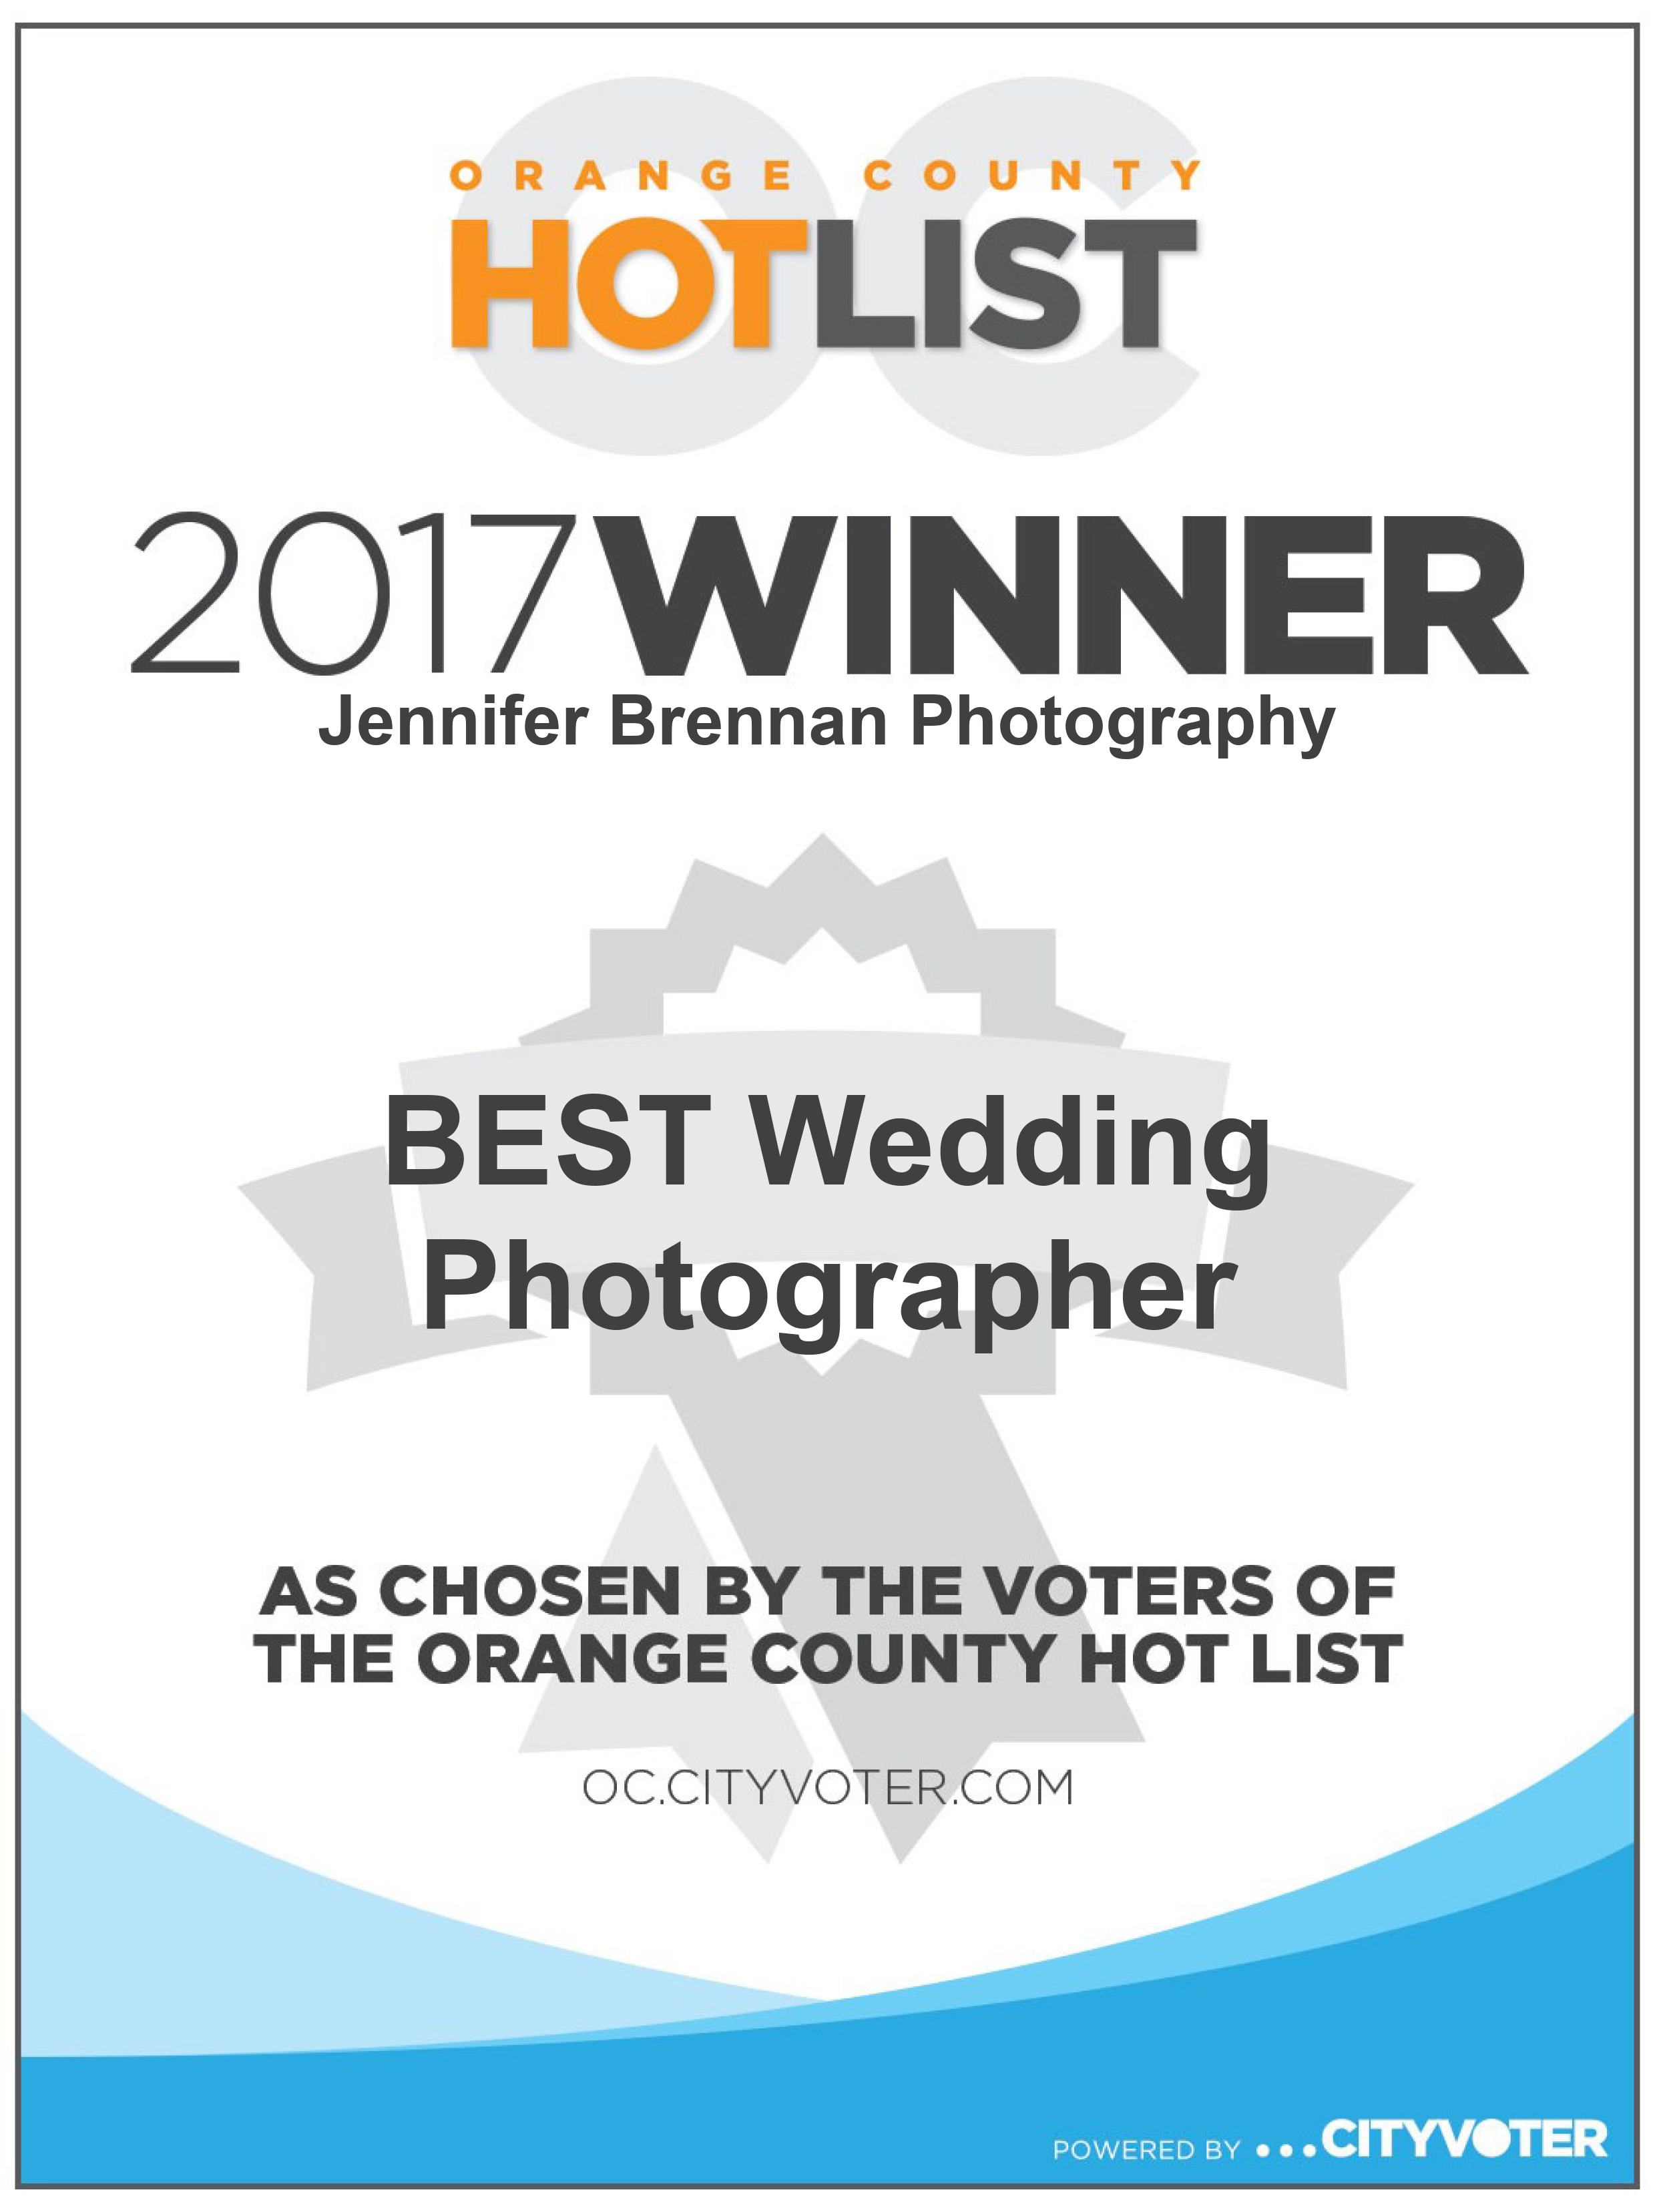 jennifer-brennan-photography-winners-certificate-2.jpg